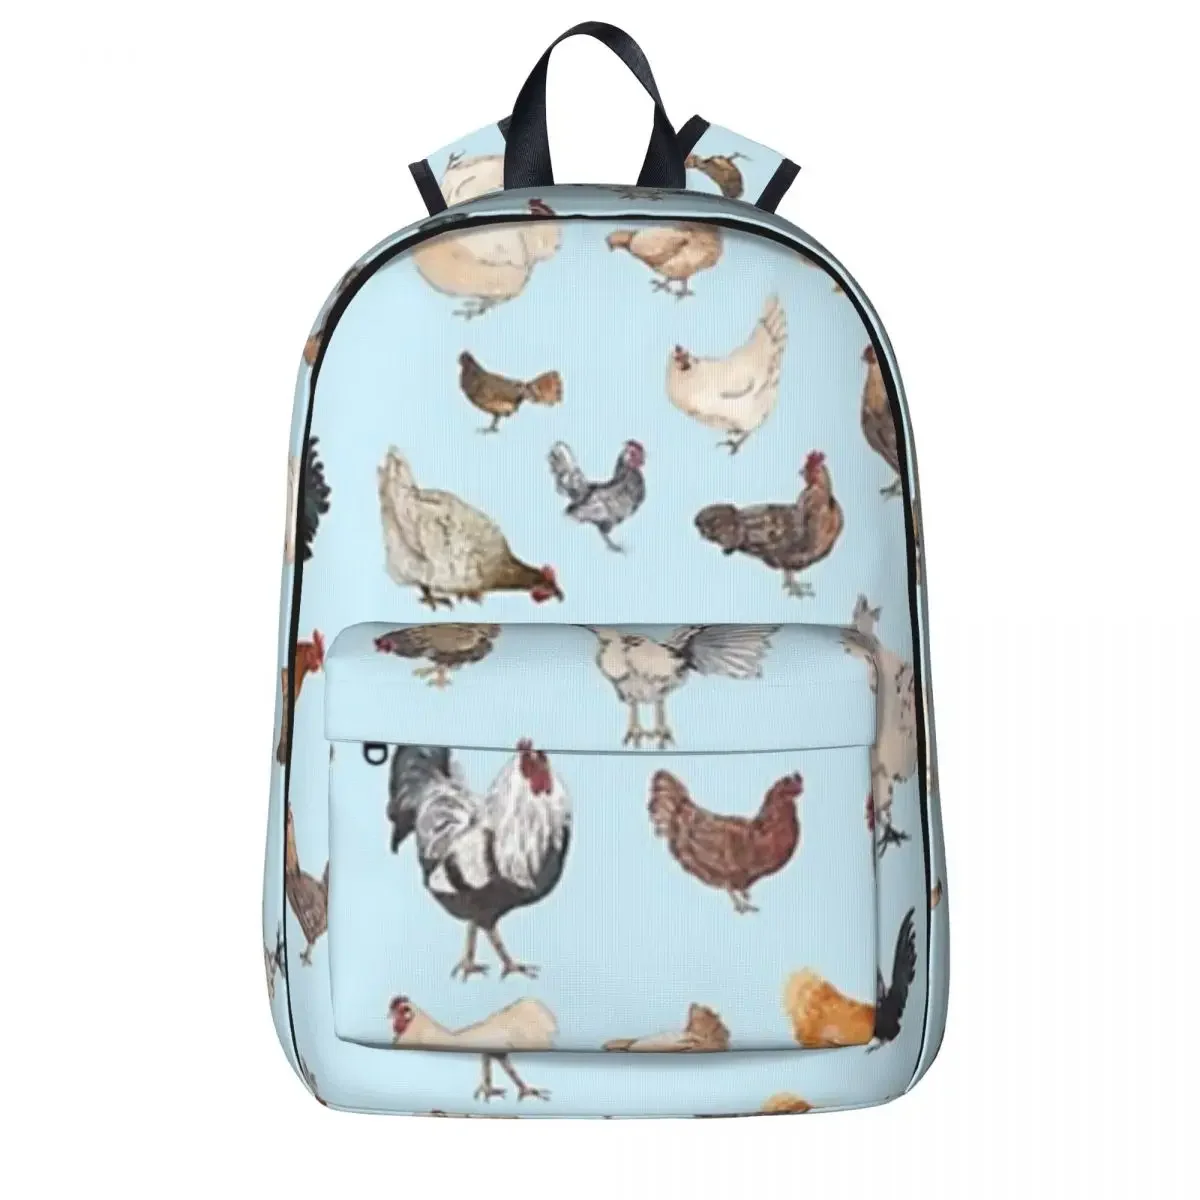 

Chicken Happy Backpack Fashion Children School Bag Laptop Rucksack Travel Rucksack Large Capacity Bookbag